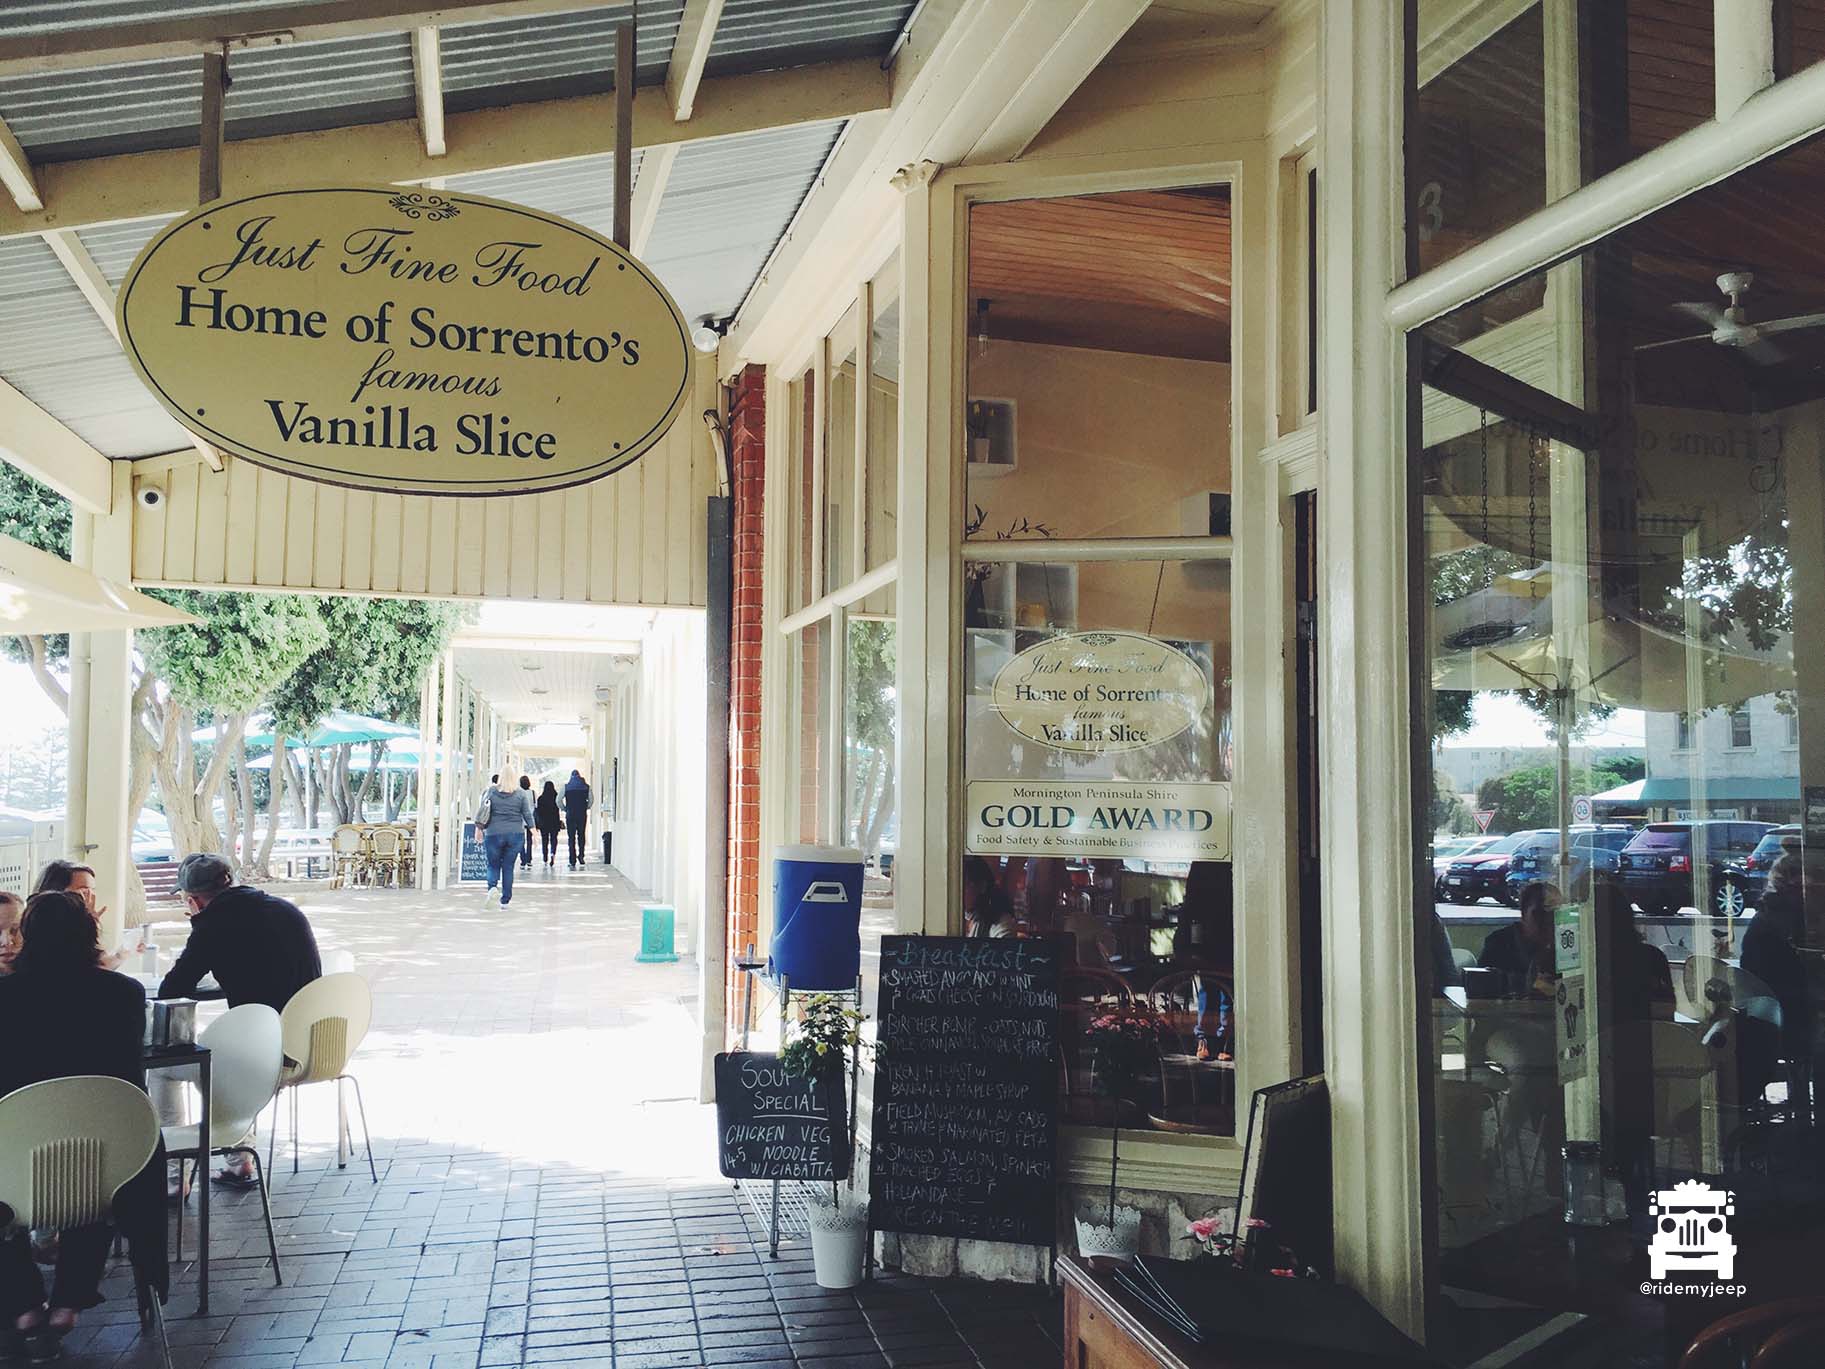 Just Fine Food Delicatessen, the home of the famous vanilla slice